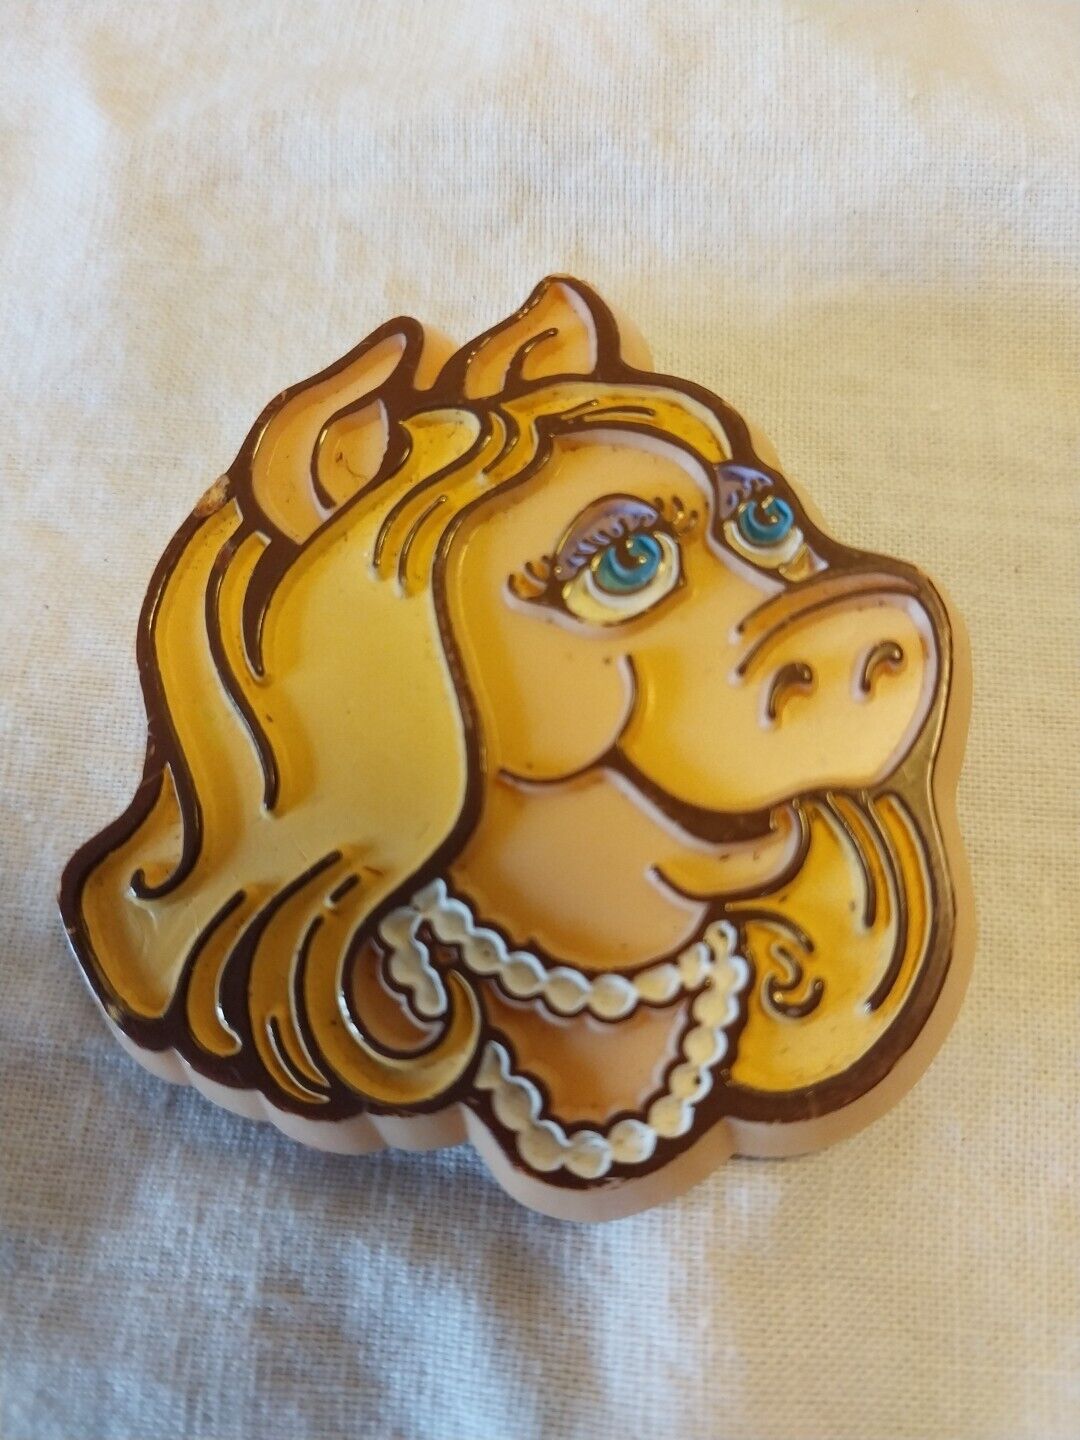 Vintage 1979 Miss Piggy Pin Brooch Jim Henson Associates Muppets Collectible